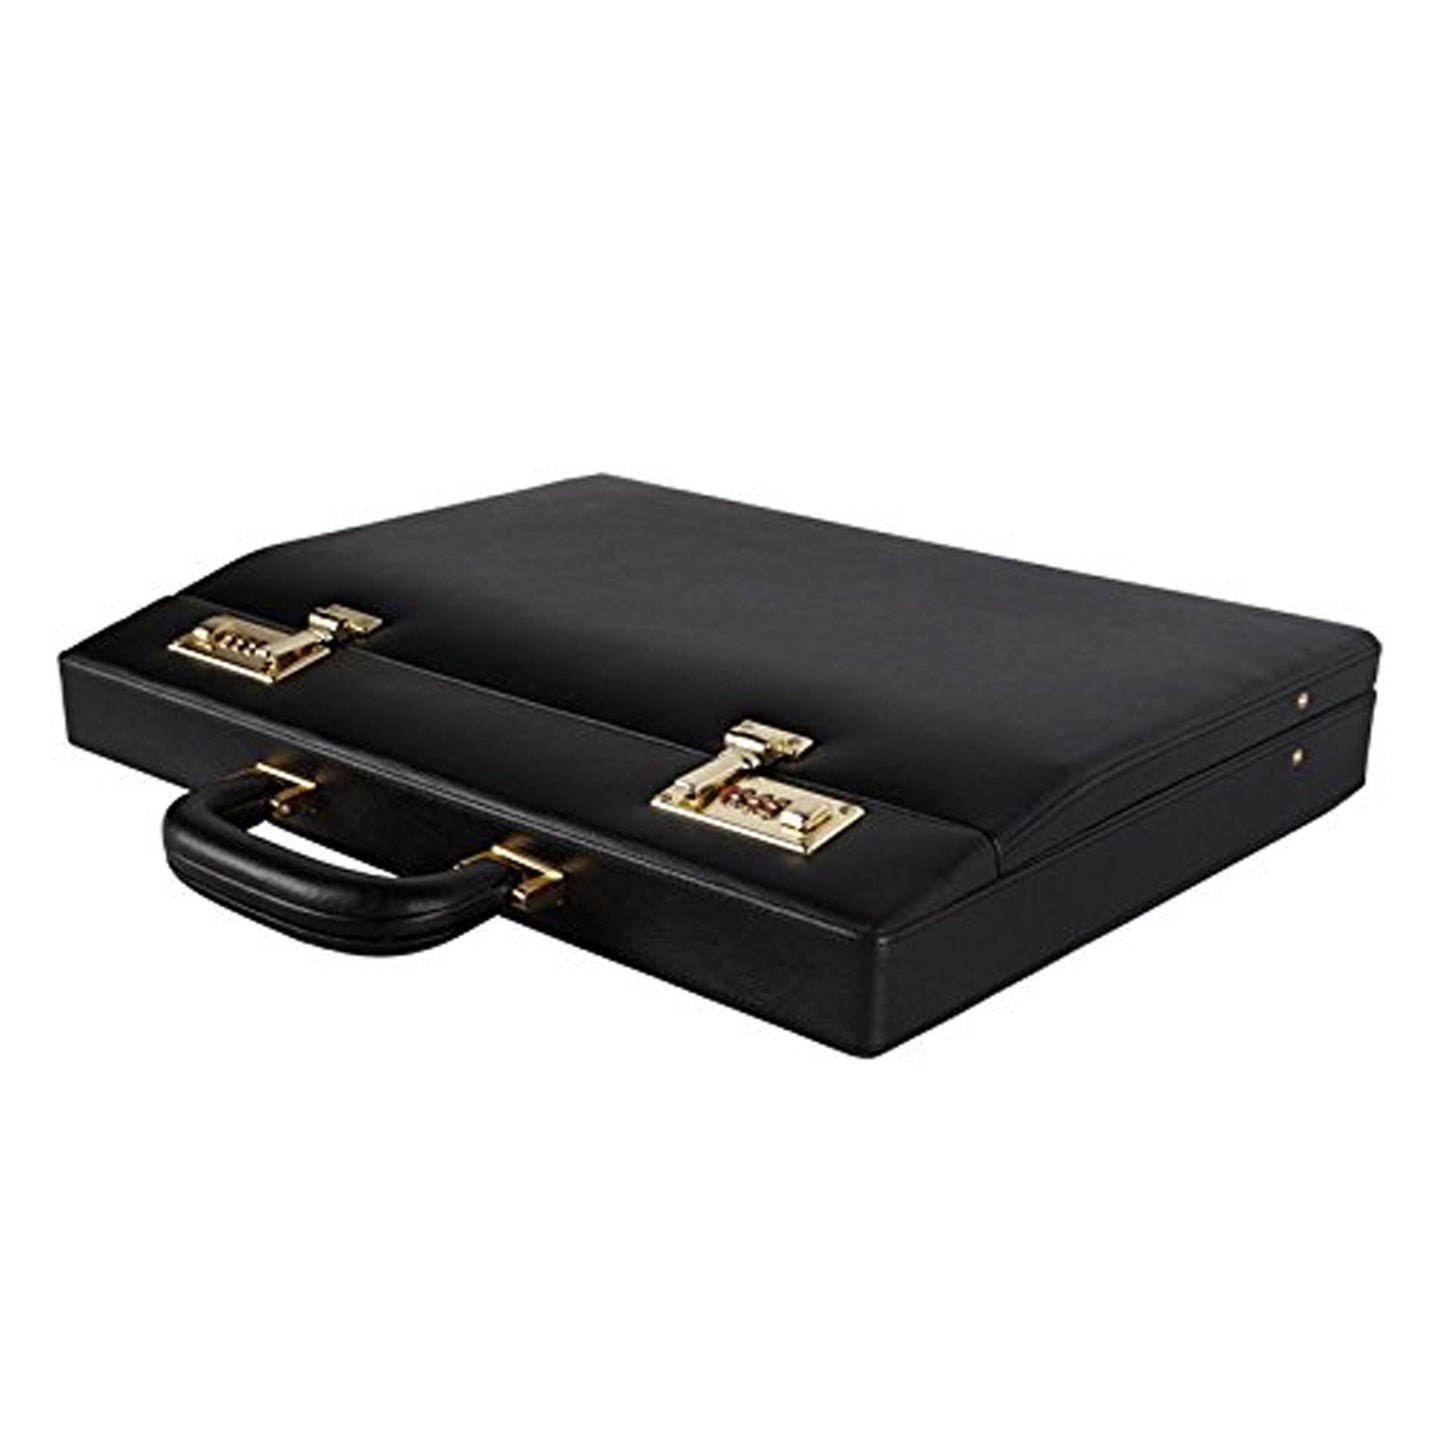 Genuine Leather Attache Briefcase for Men's Leather Executive Handbag 14 inch Laptop Bag MacBook Carry Case Documents Organizer (Black)